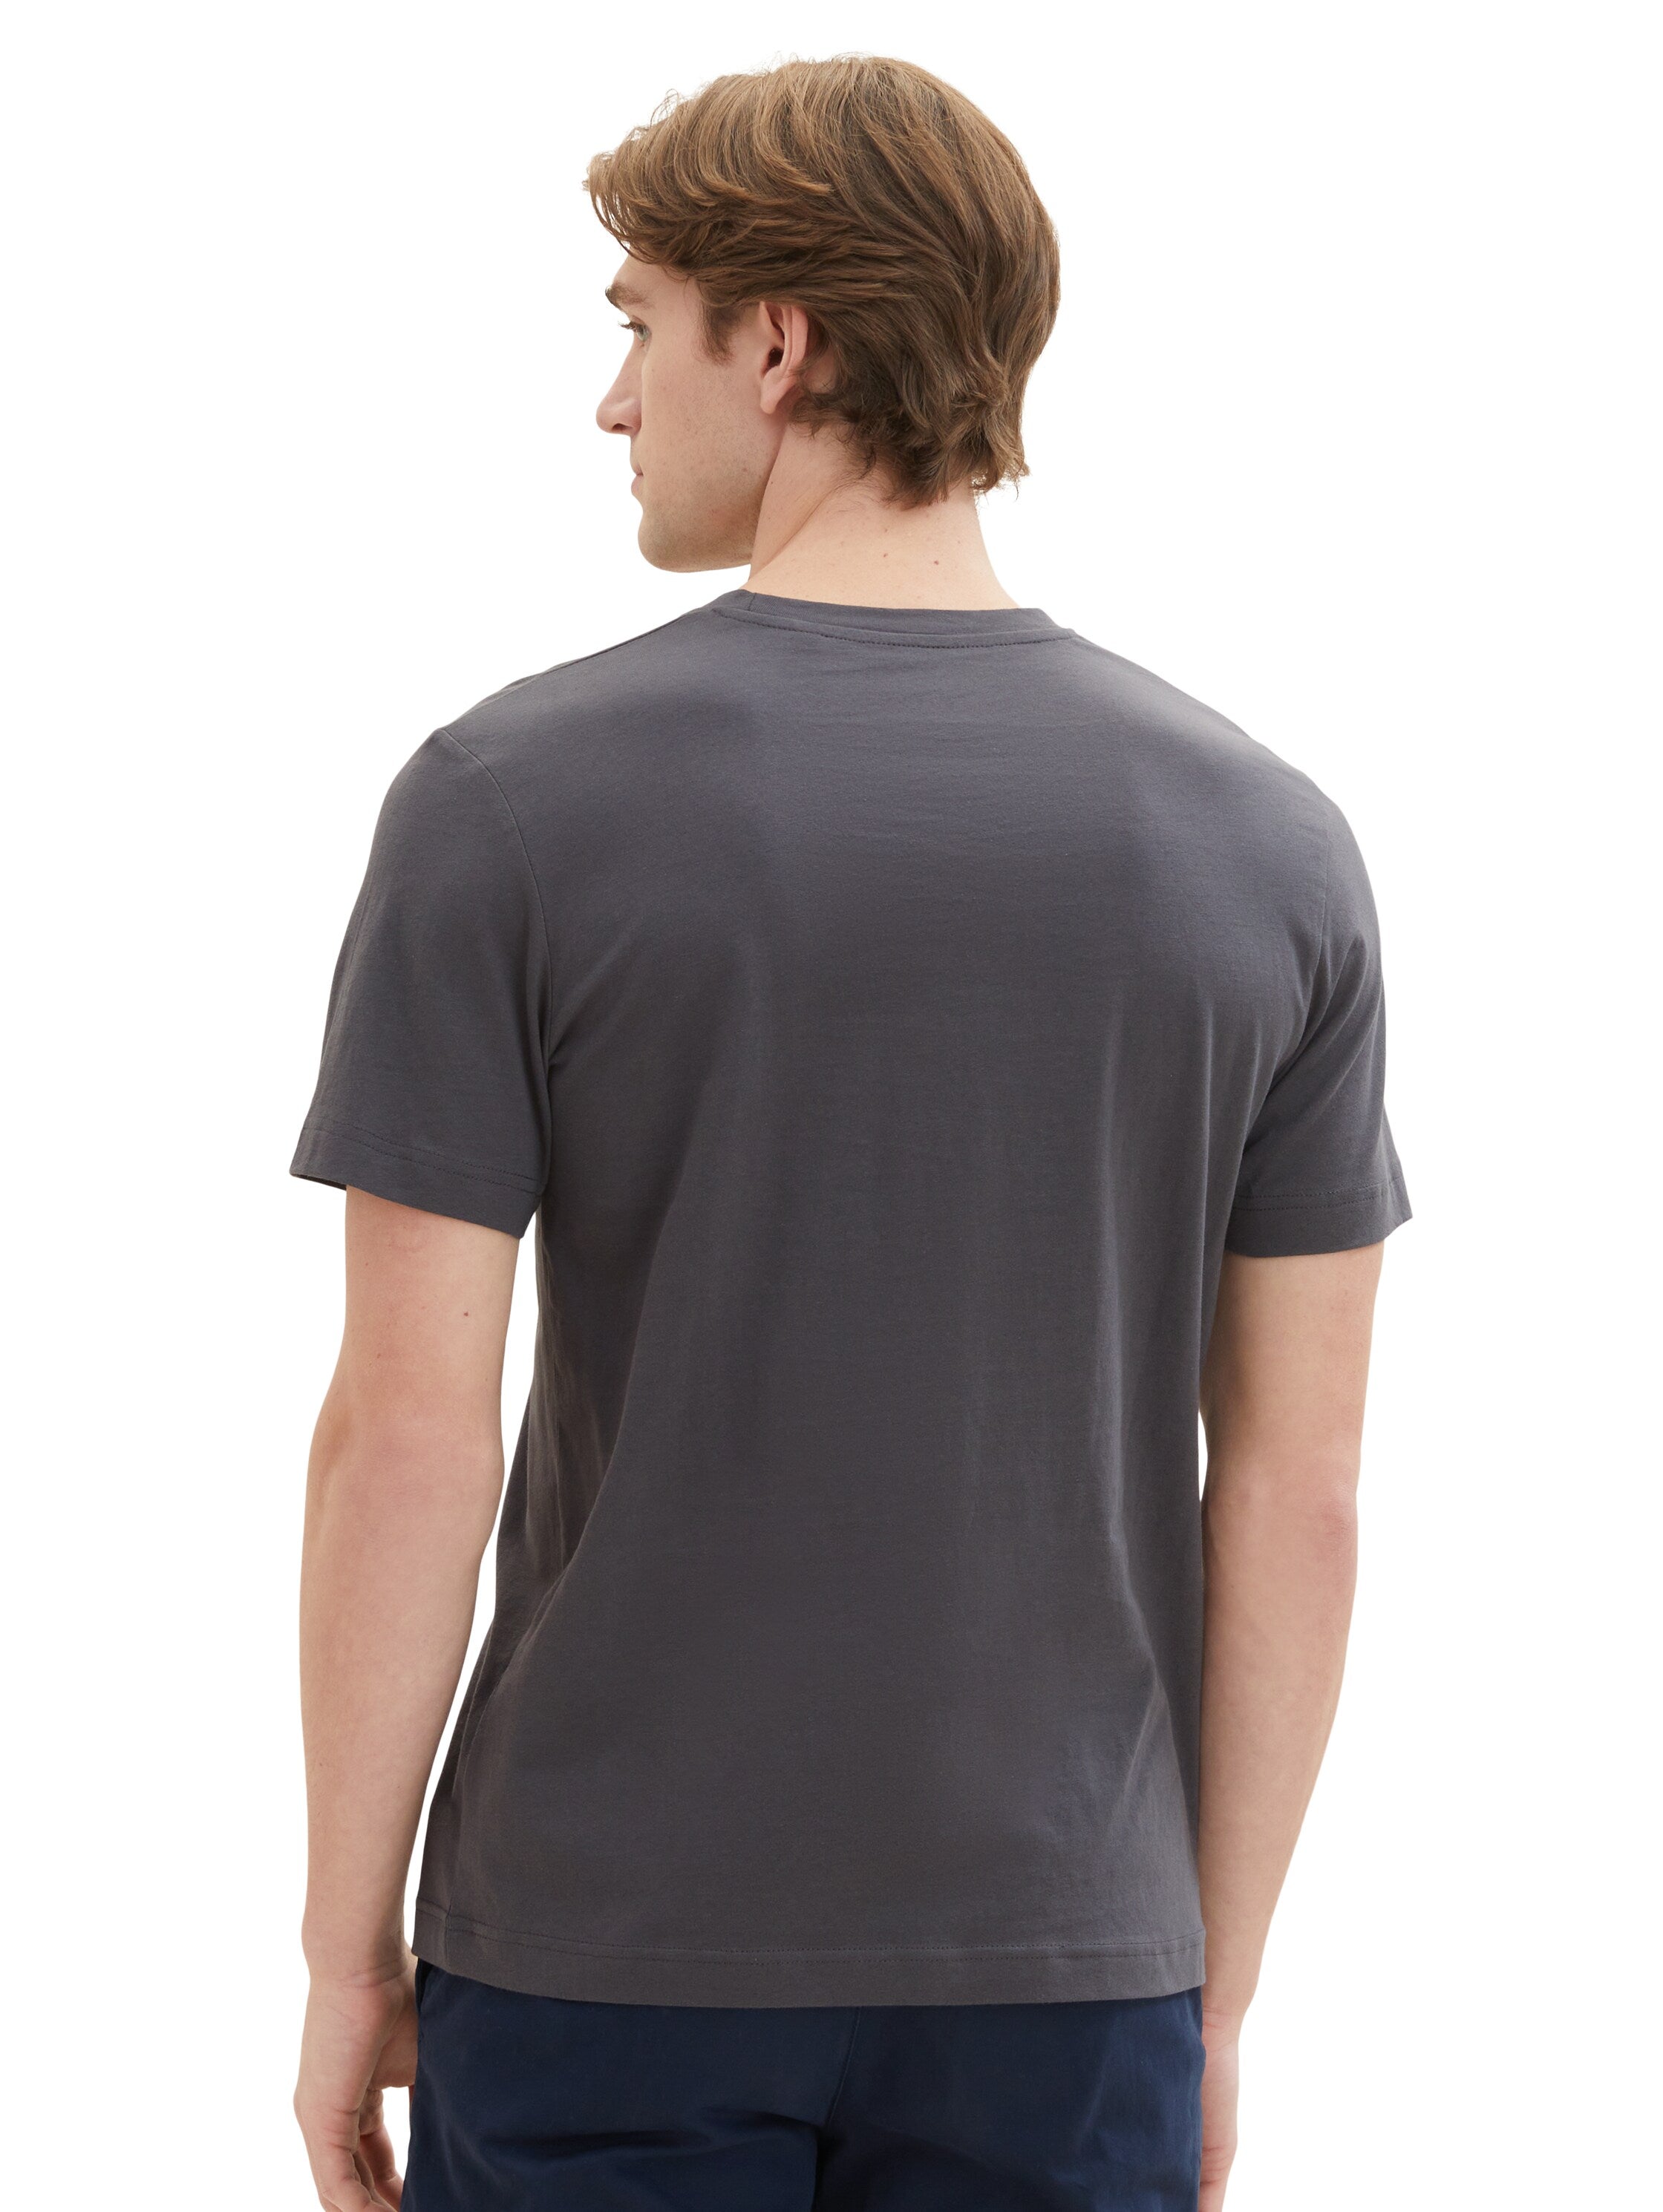 Tom Tailor Tarmac Grey Printed T-Shirt